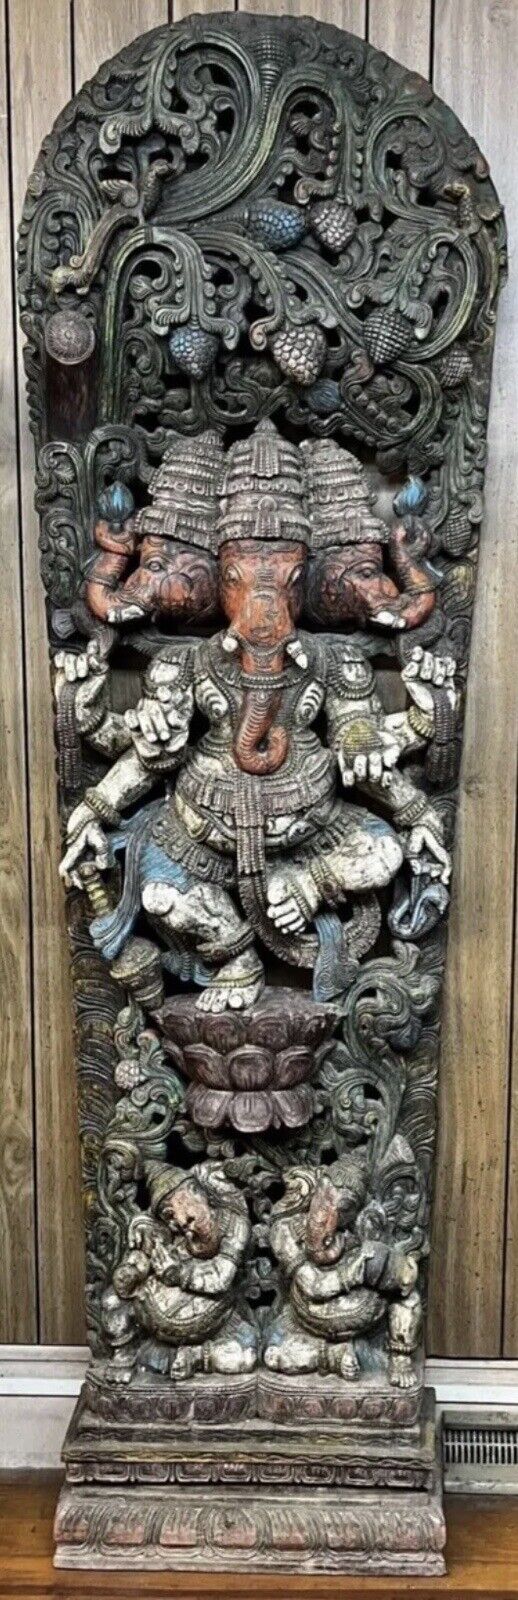 Airavata Elephant God 9 ft. Tall, circa 200 Yr. Old Wooden India Hindu Statue